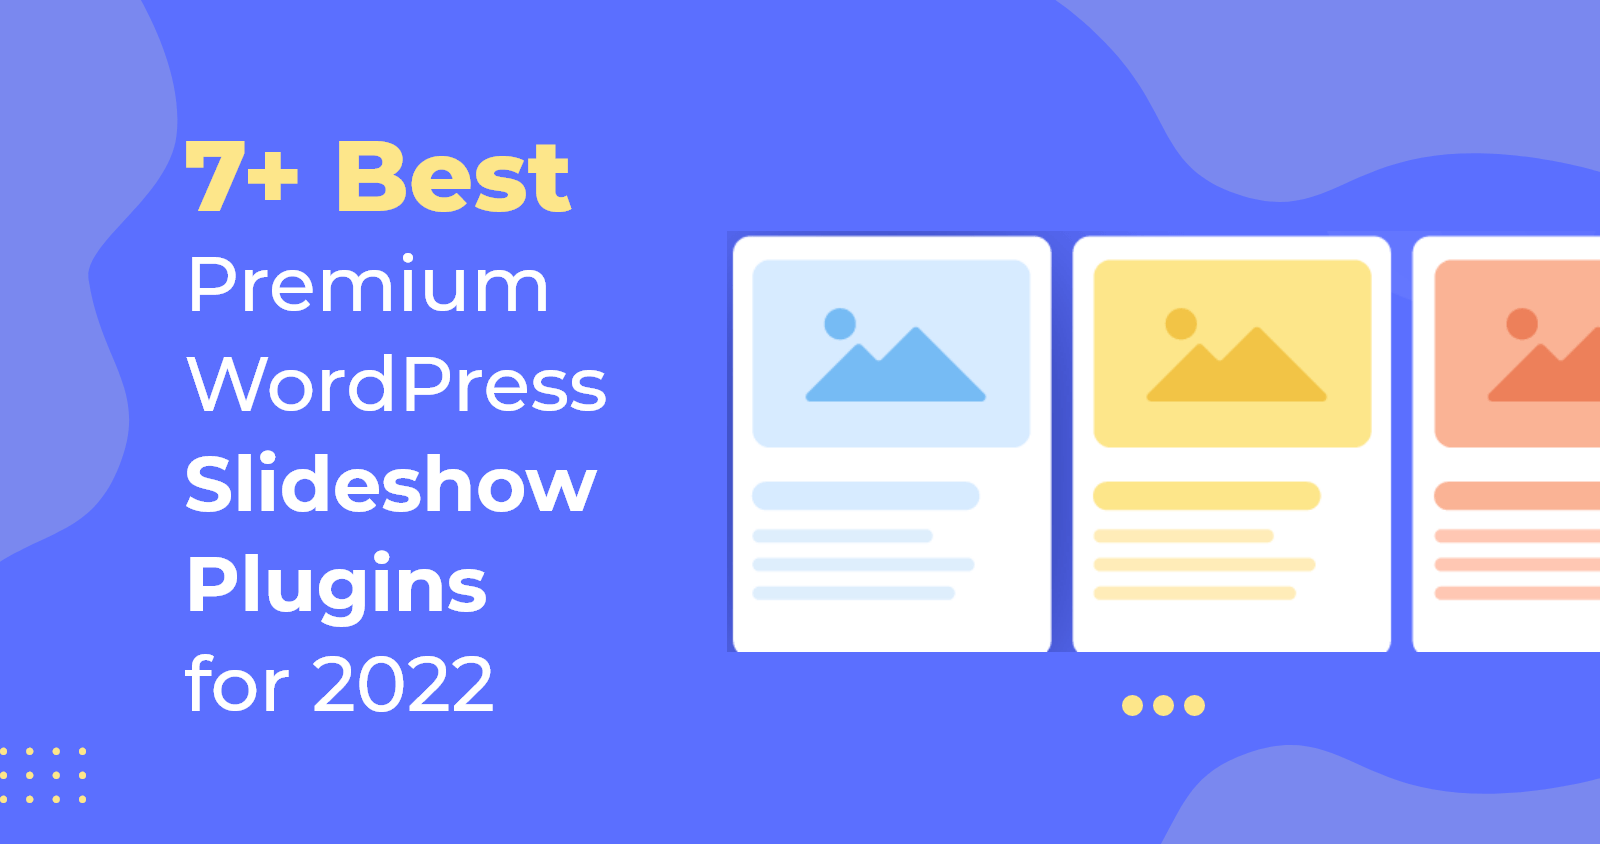 7+ Best Premium WordPress Slideshow Plugins for 2022